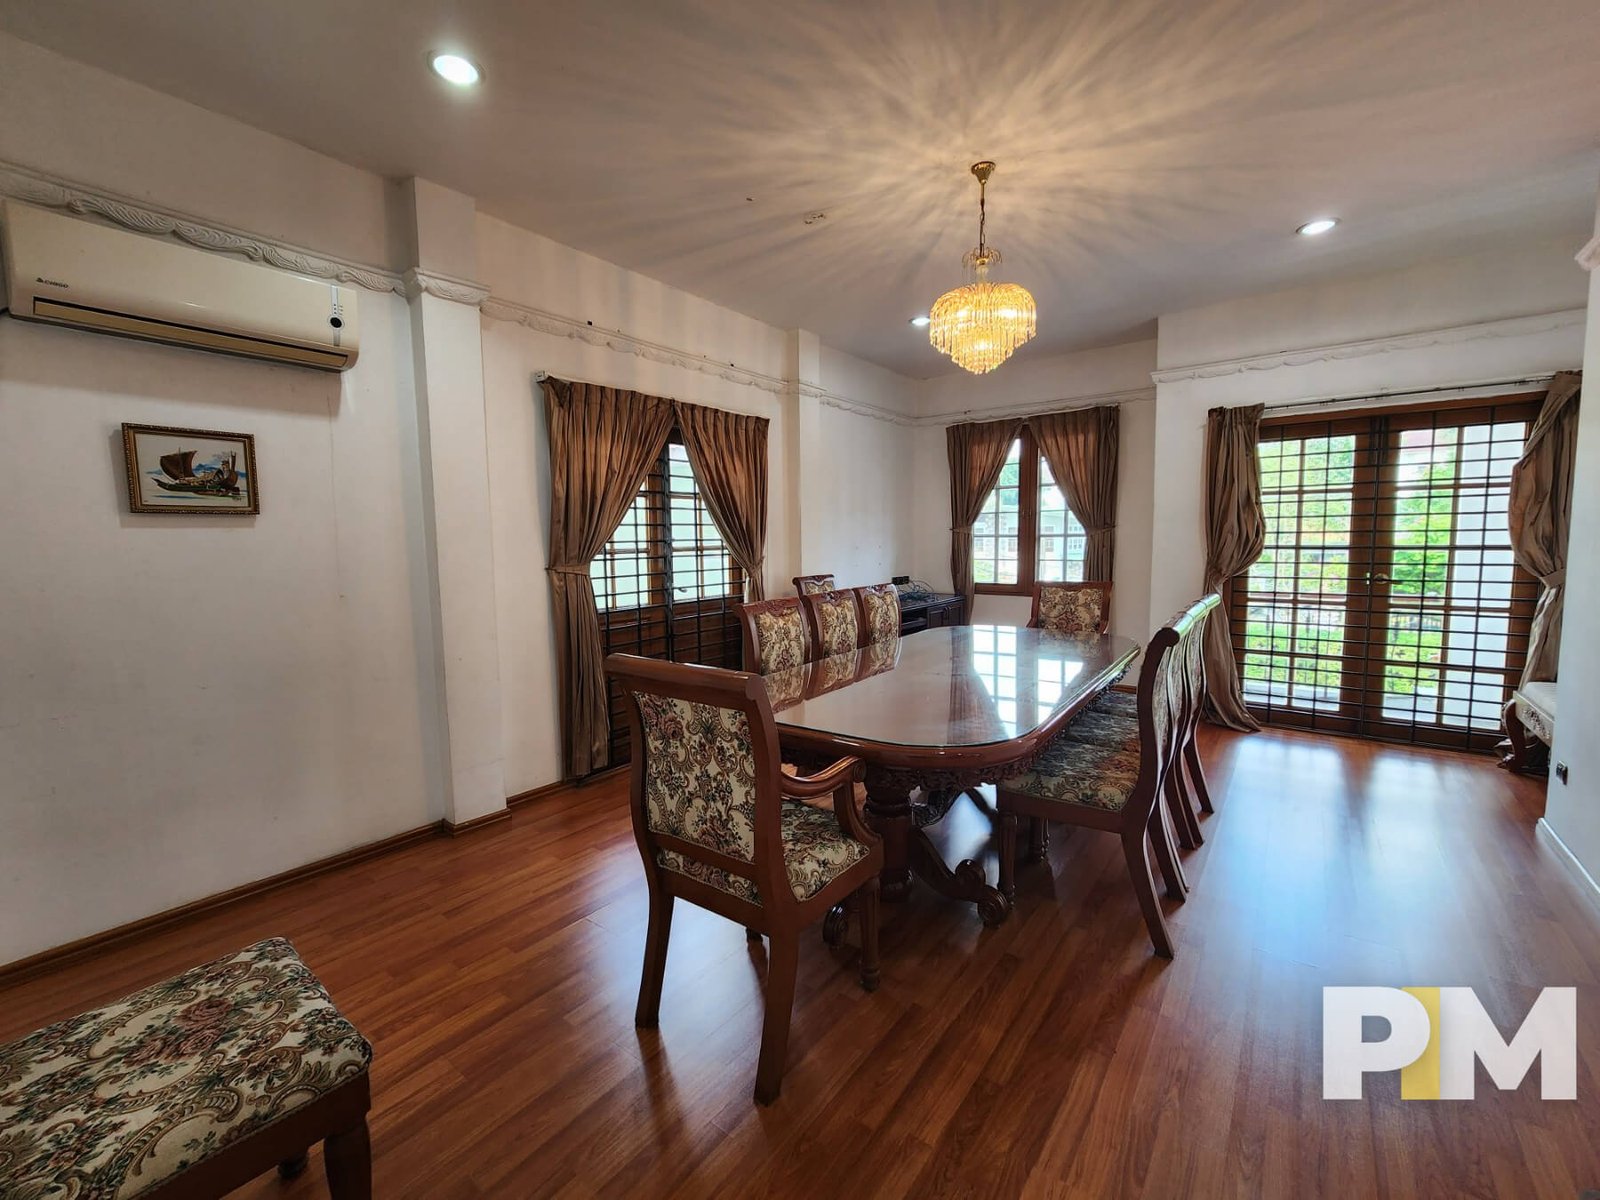 Dining room - Myanmar Real Estate